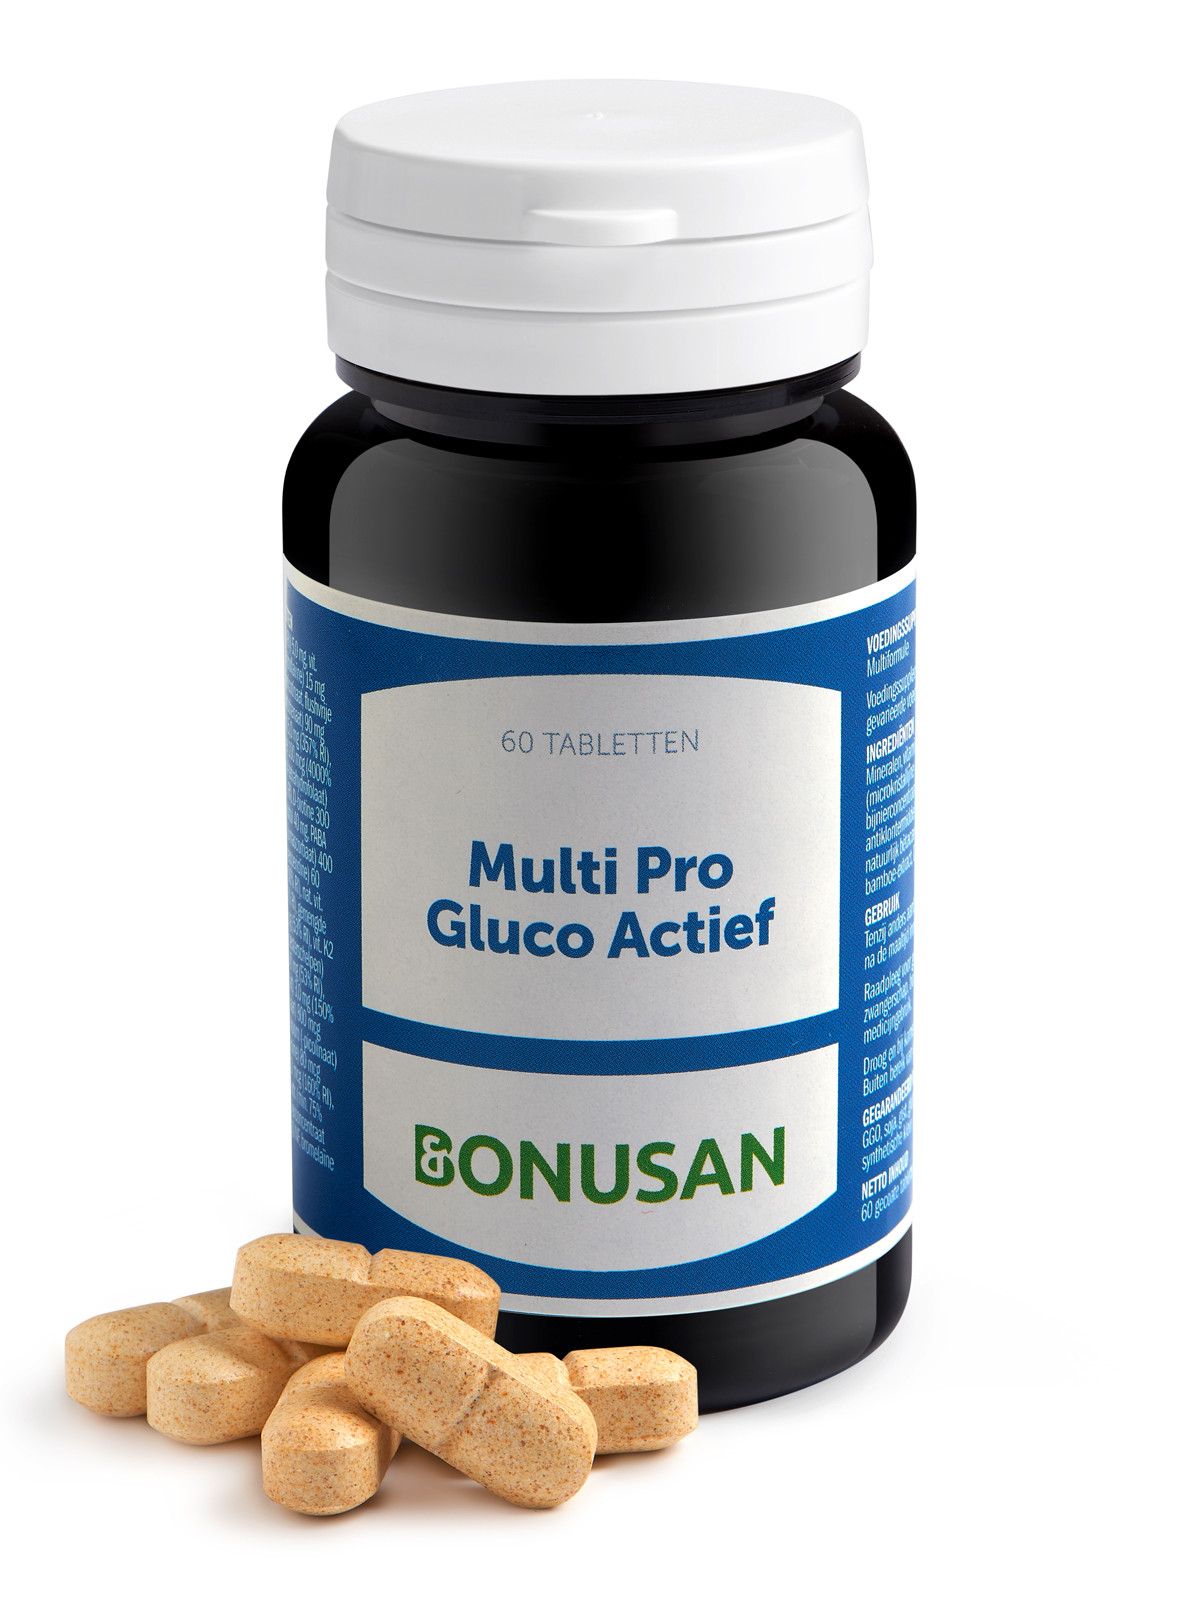 Bonusan - Multi Pro gluco actief - 60 stuks